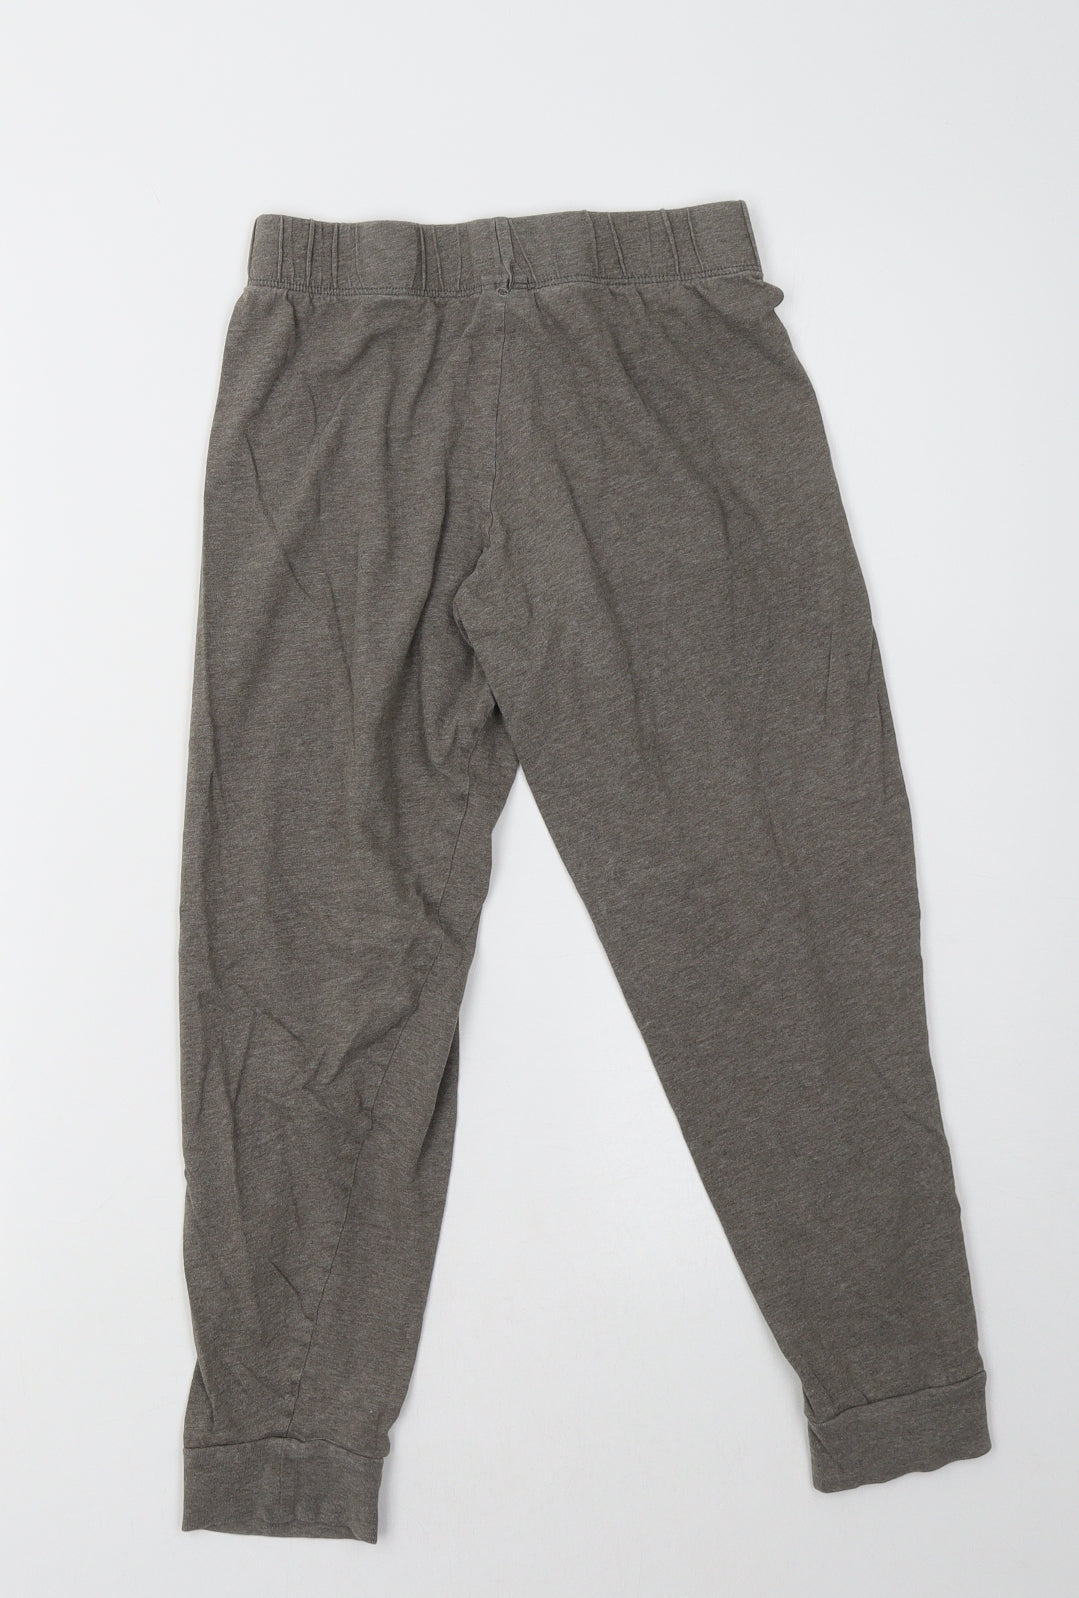 M&S Boys Beige  Cotton  Pyjama Pants Size 9-10 Years